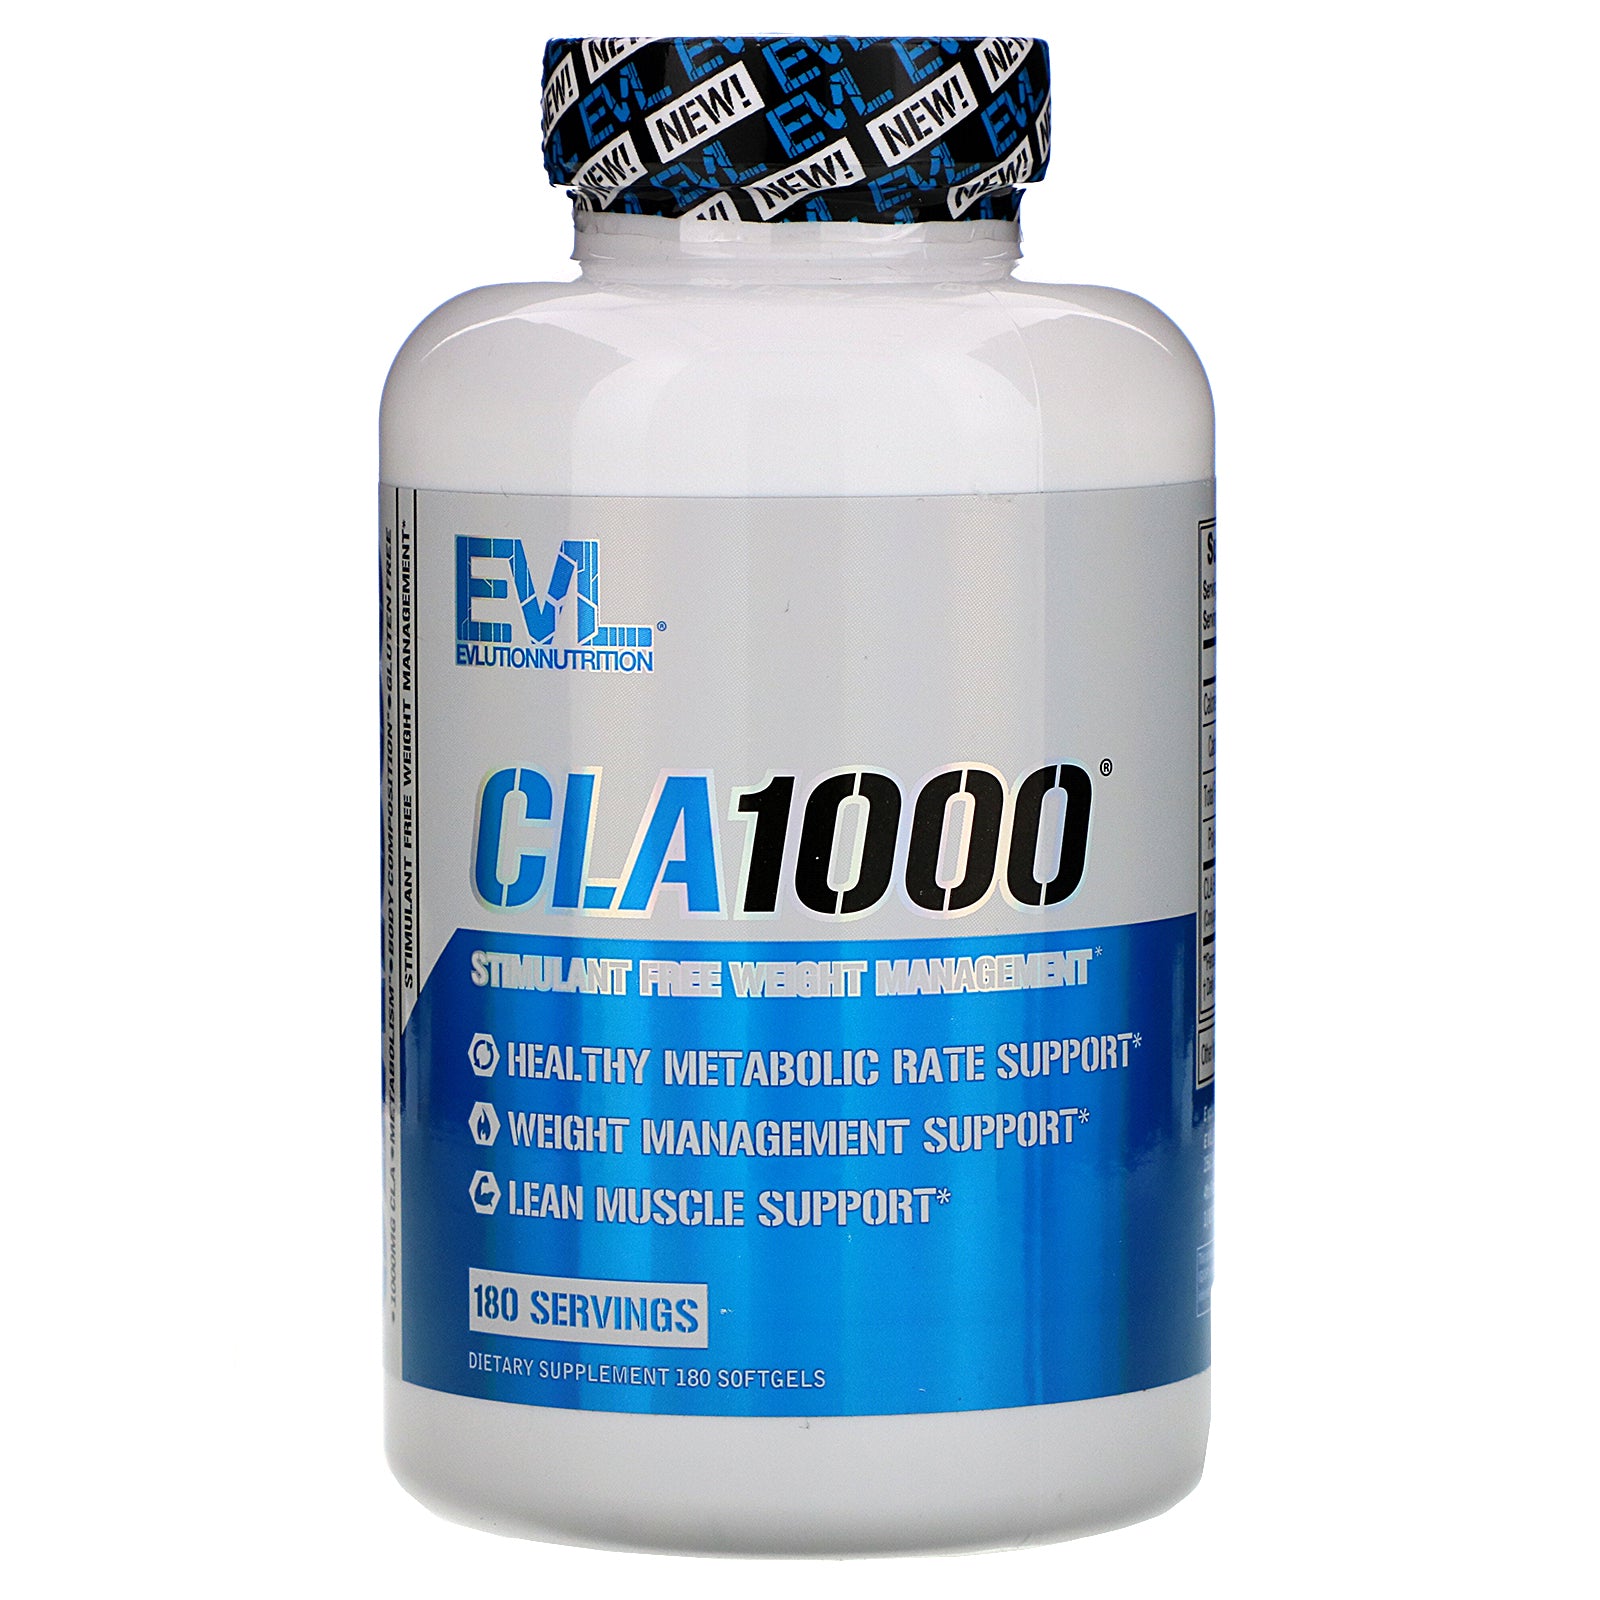 EVLution Nutrition, CLA1000, Stimulant Free Weight Management